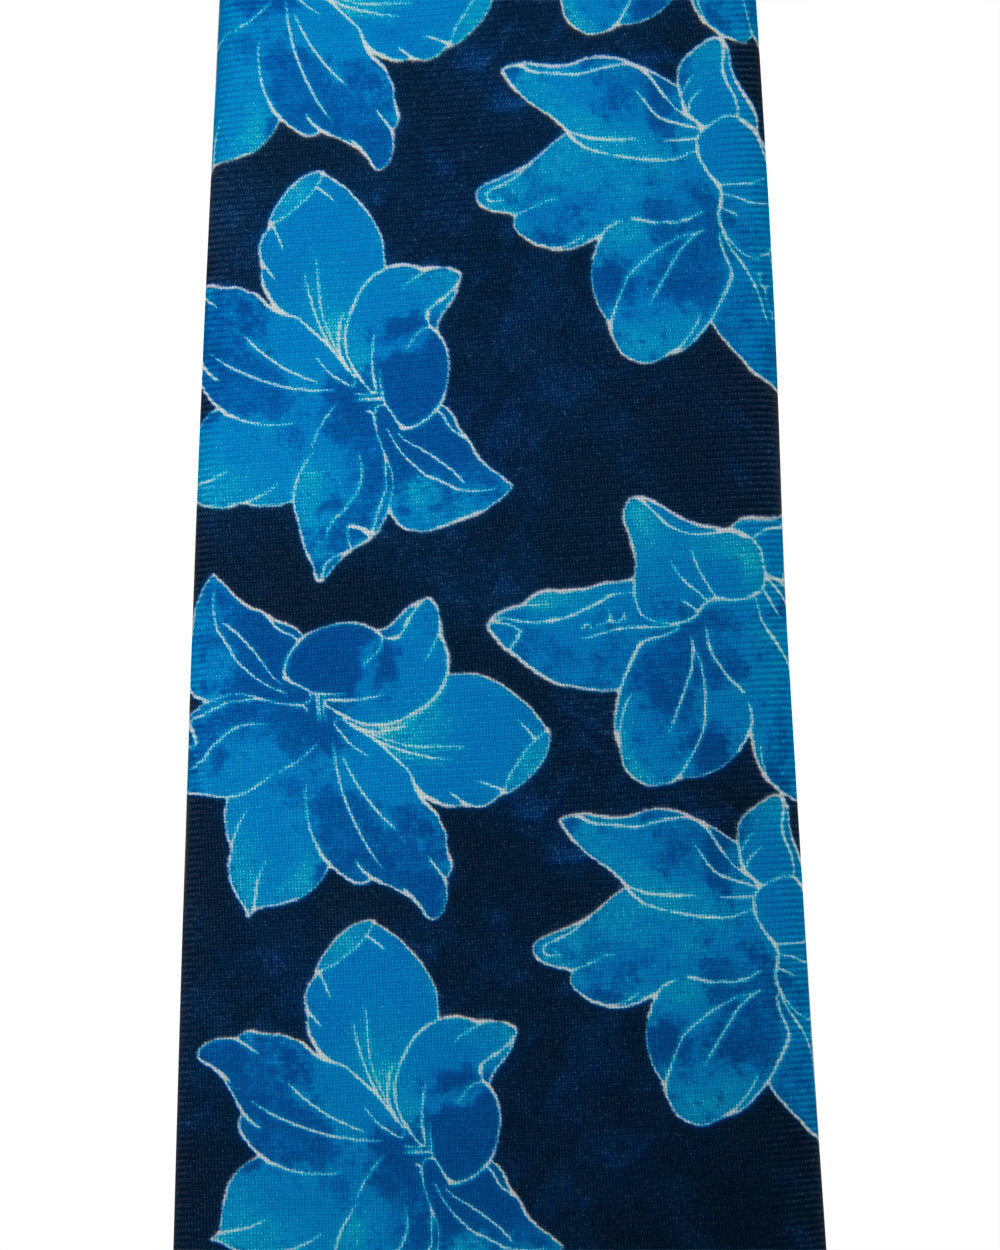 Navy and Aqua Blue Floral Tie